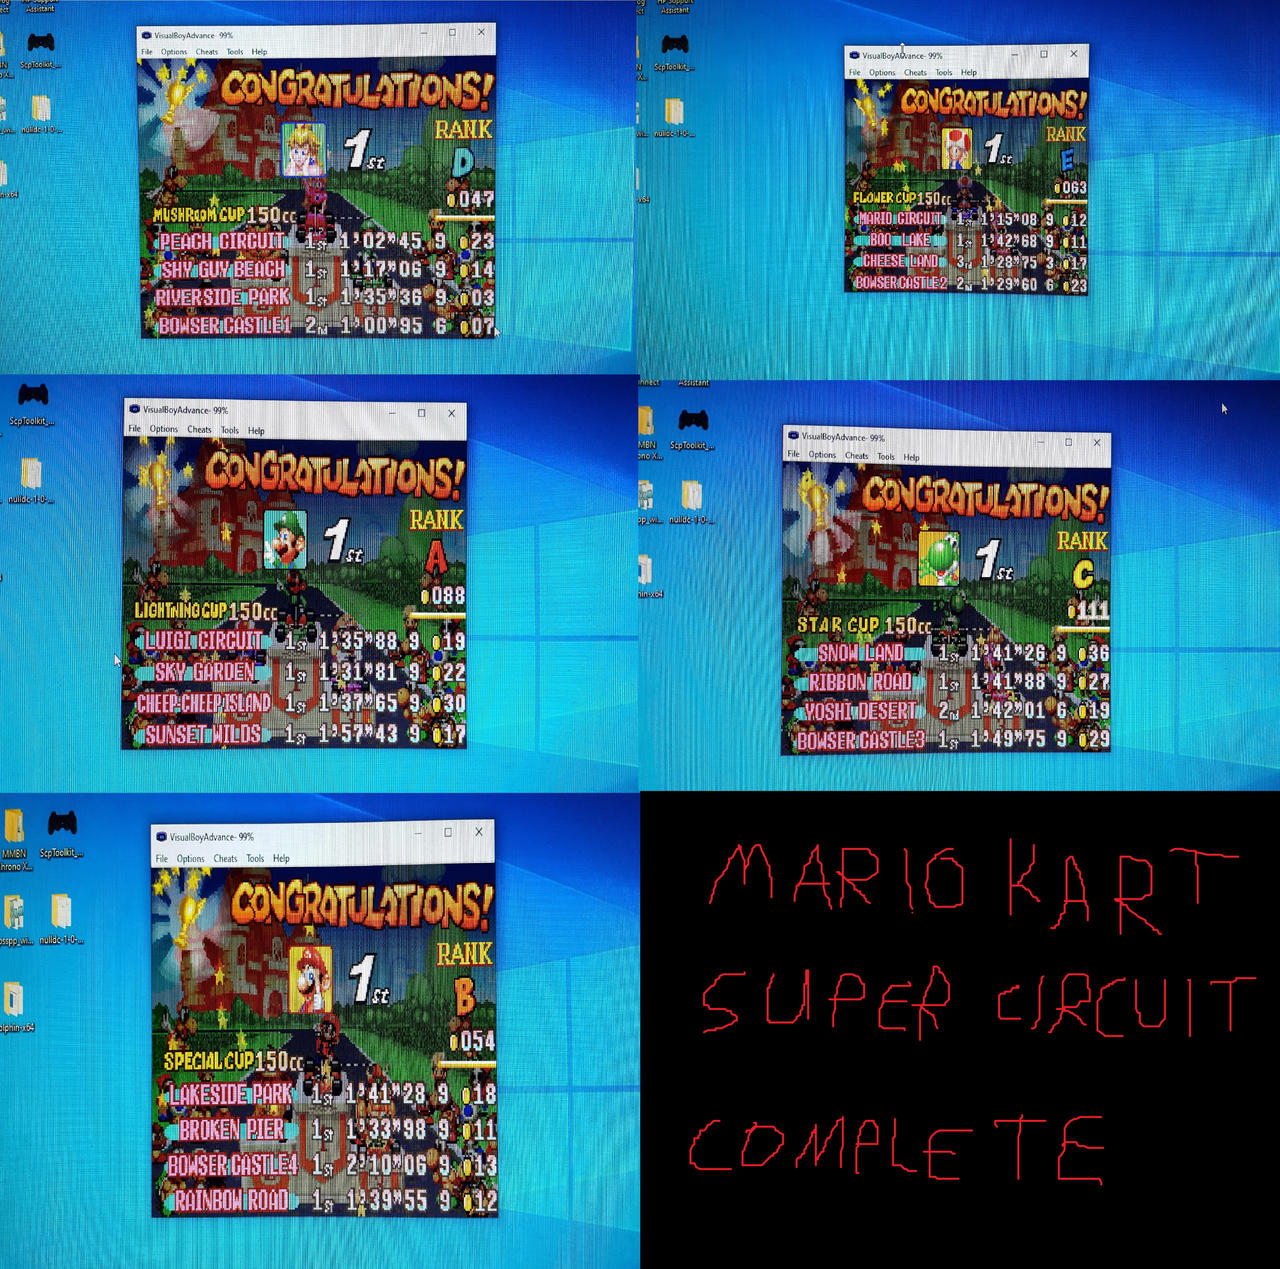 Mario Circuit (Mario Kart 7) by FamousMari5 on DeviantArt